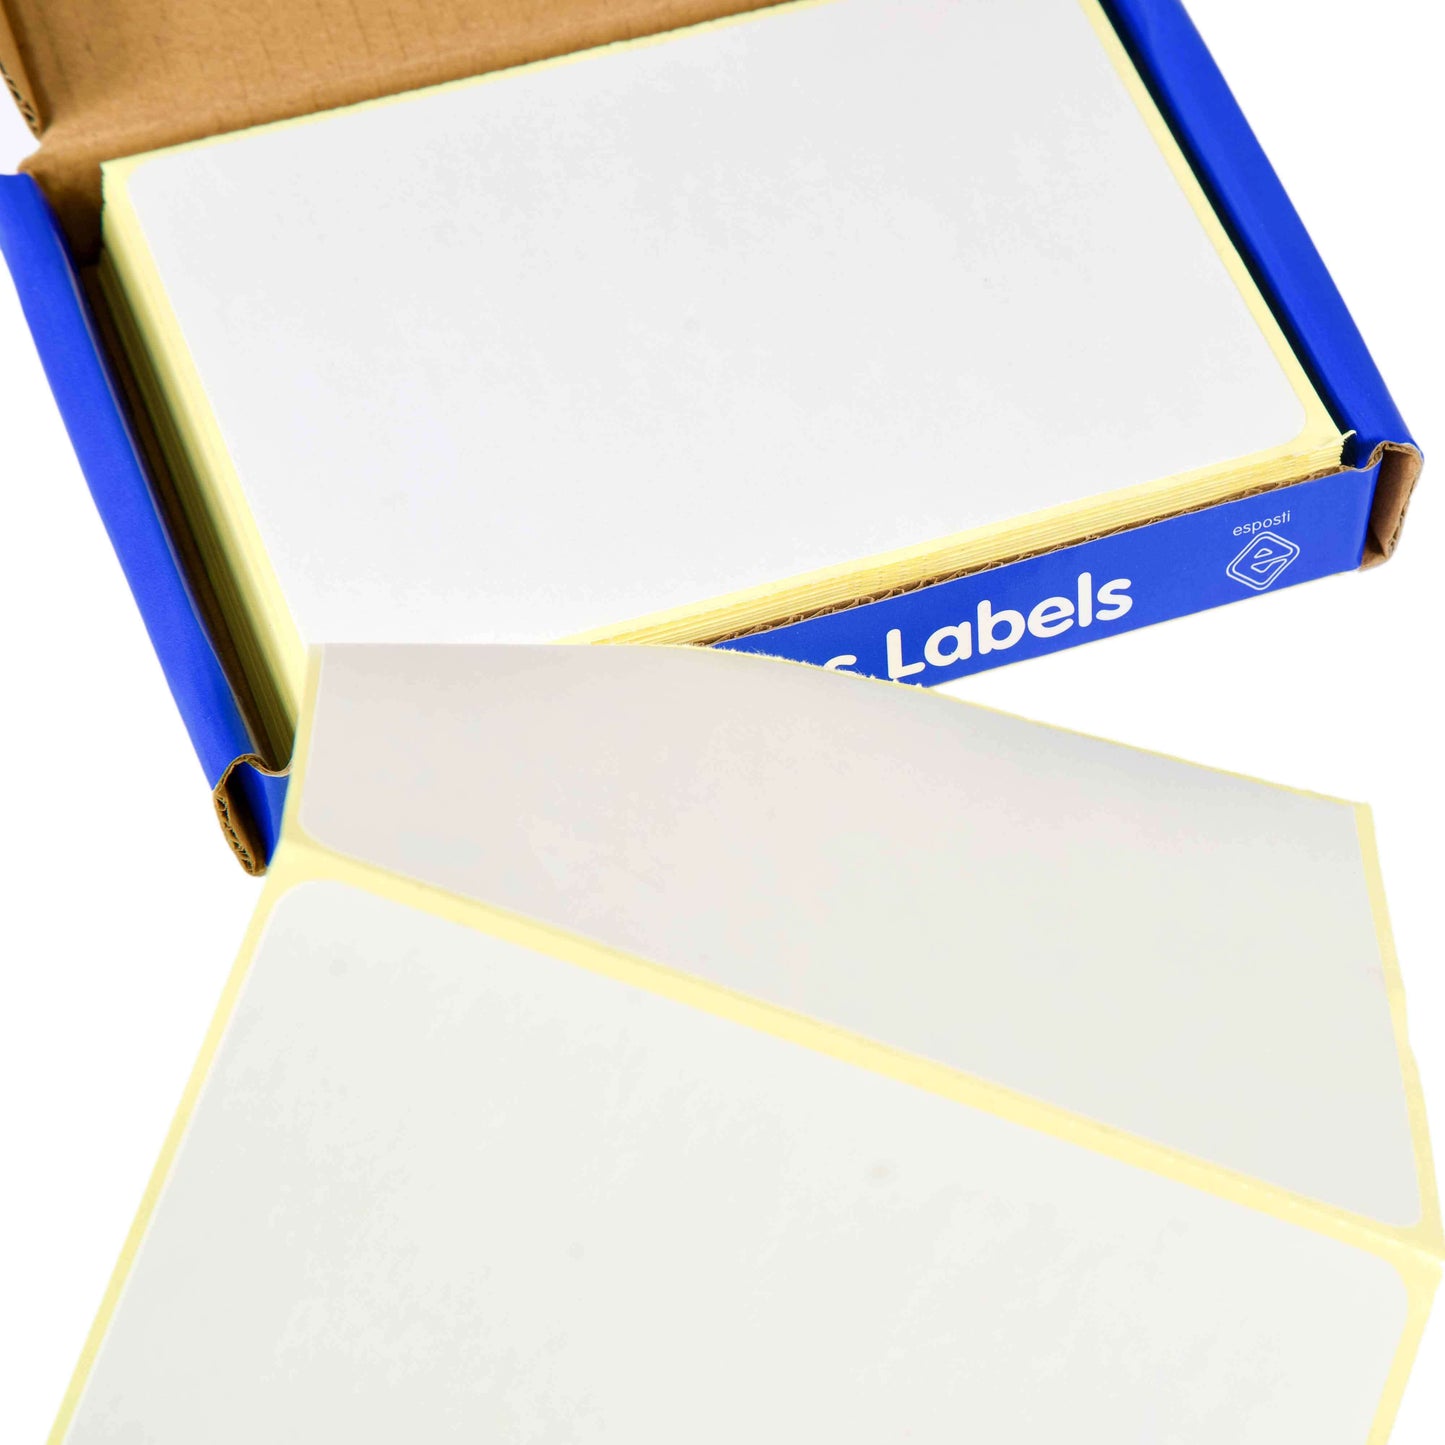 Address Labels Ex-Large Self Adhesive 60s - BL150